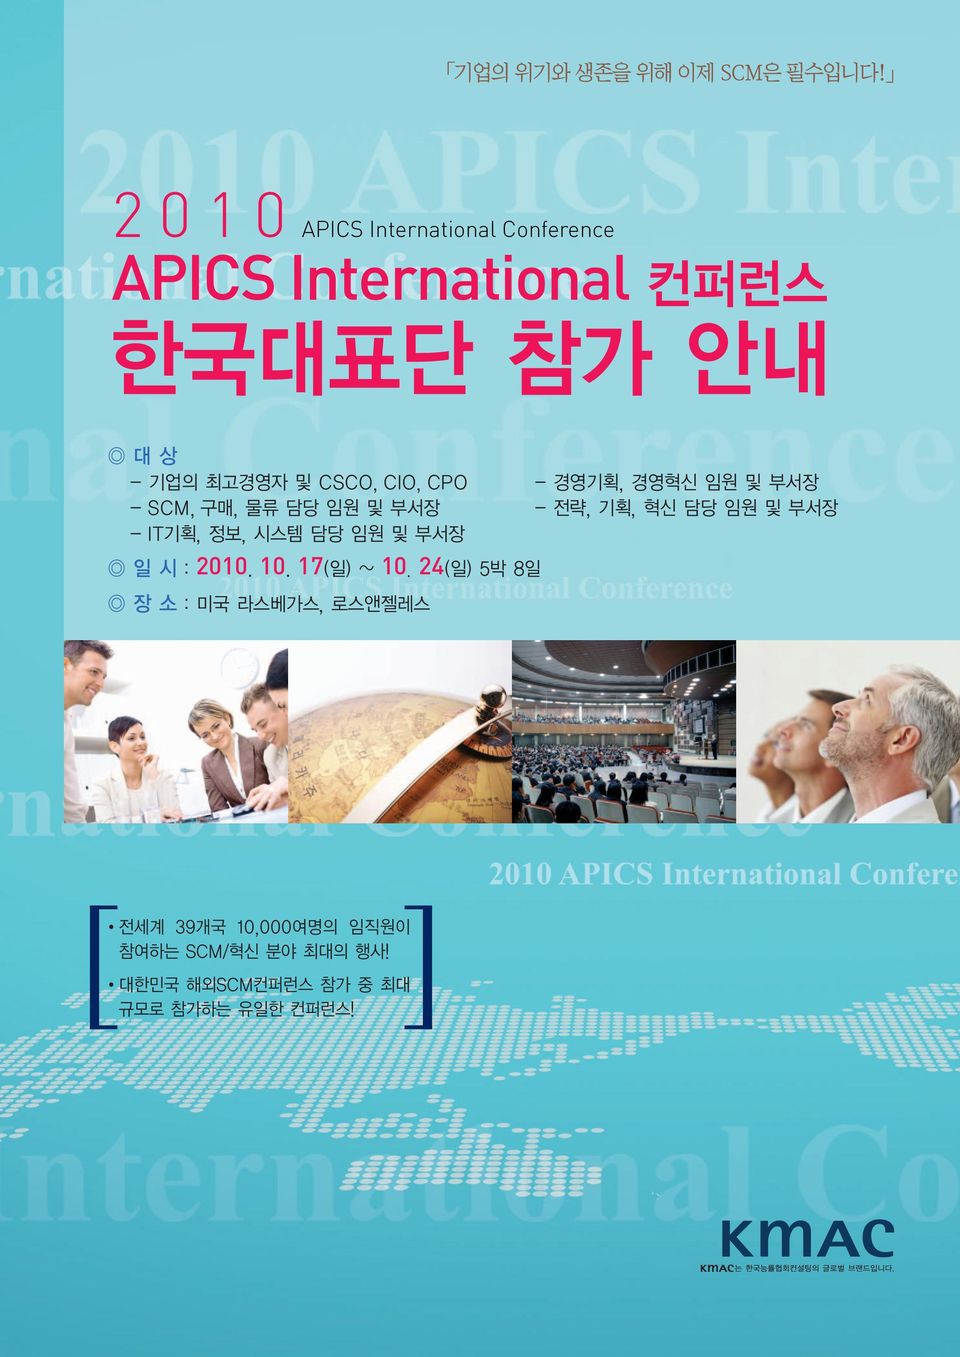 Conference APICS 